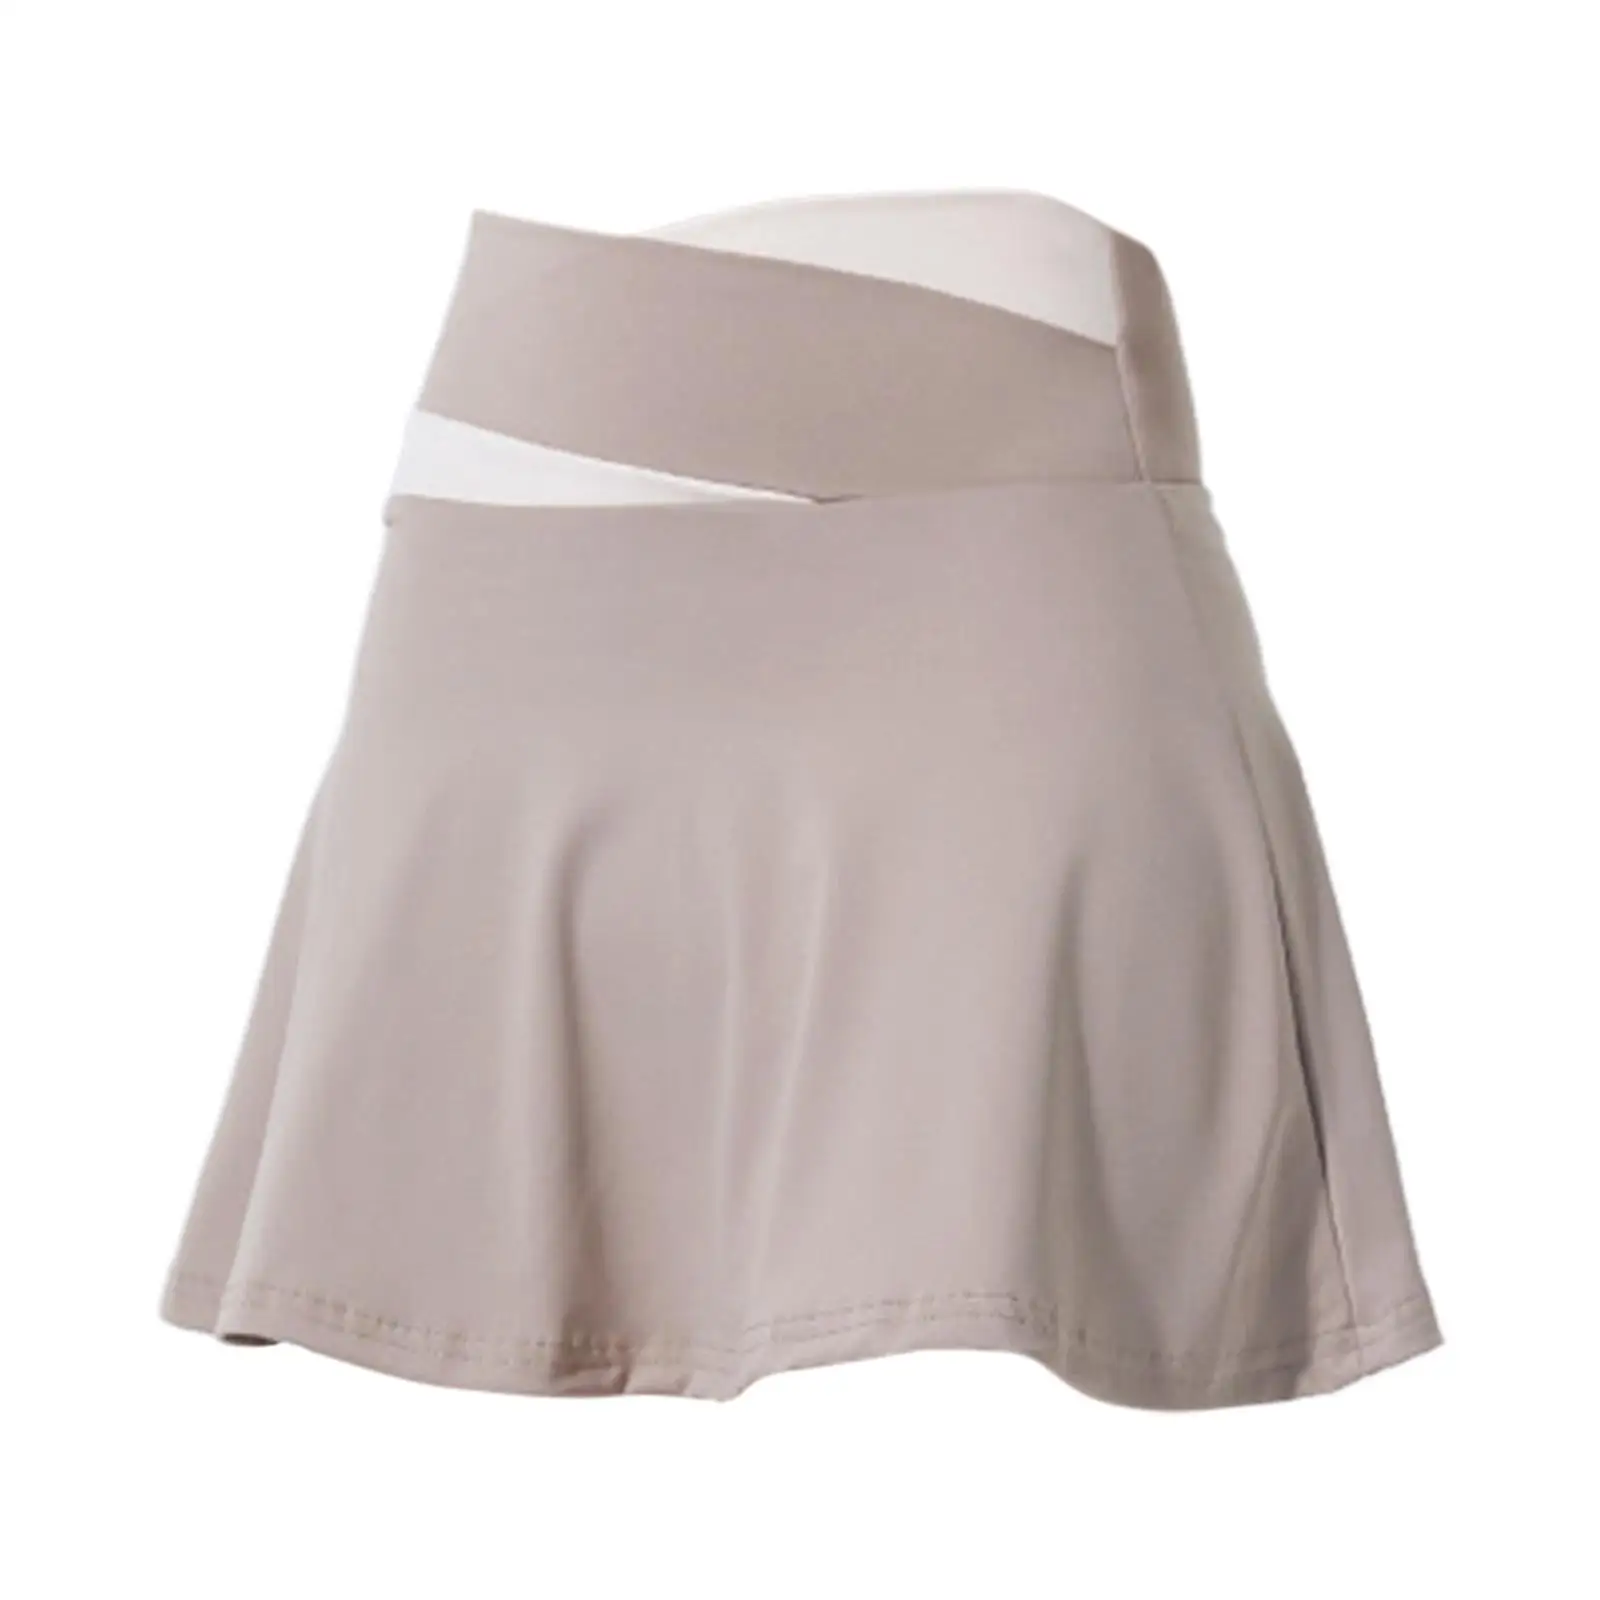 Tennis Skirt Short Skirts Mini Skirt Lightweight Clothing Athletic Ladies Soft Badminton Skirt for Golf Sport Workout